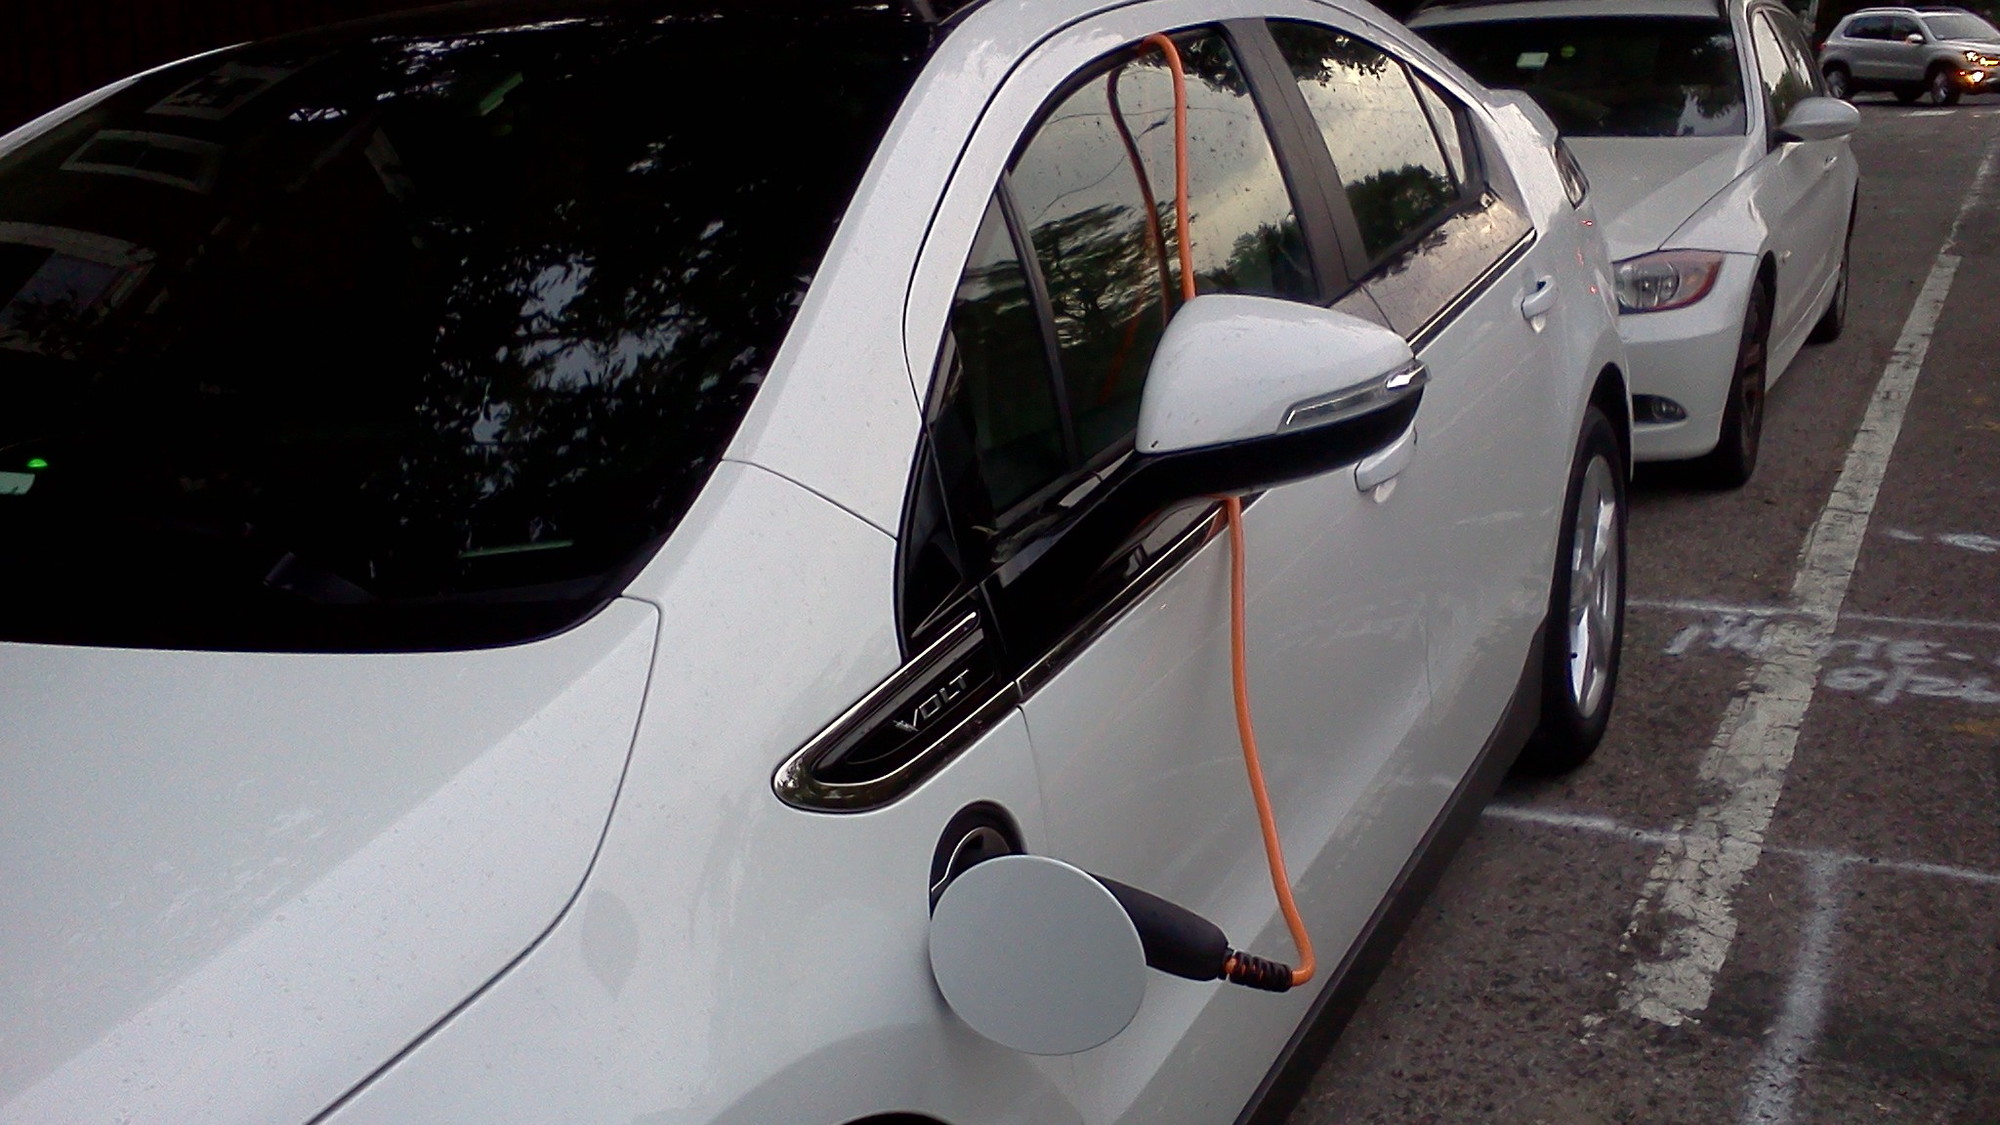 Chevy Volt recharging on the street in Cambridge, MA   [photos: John C. Briggs]